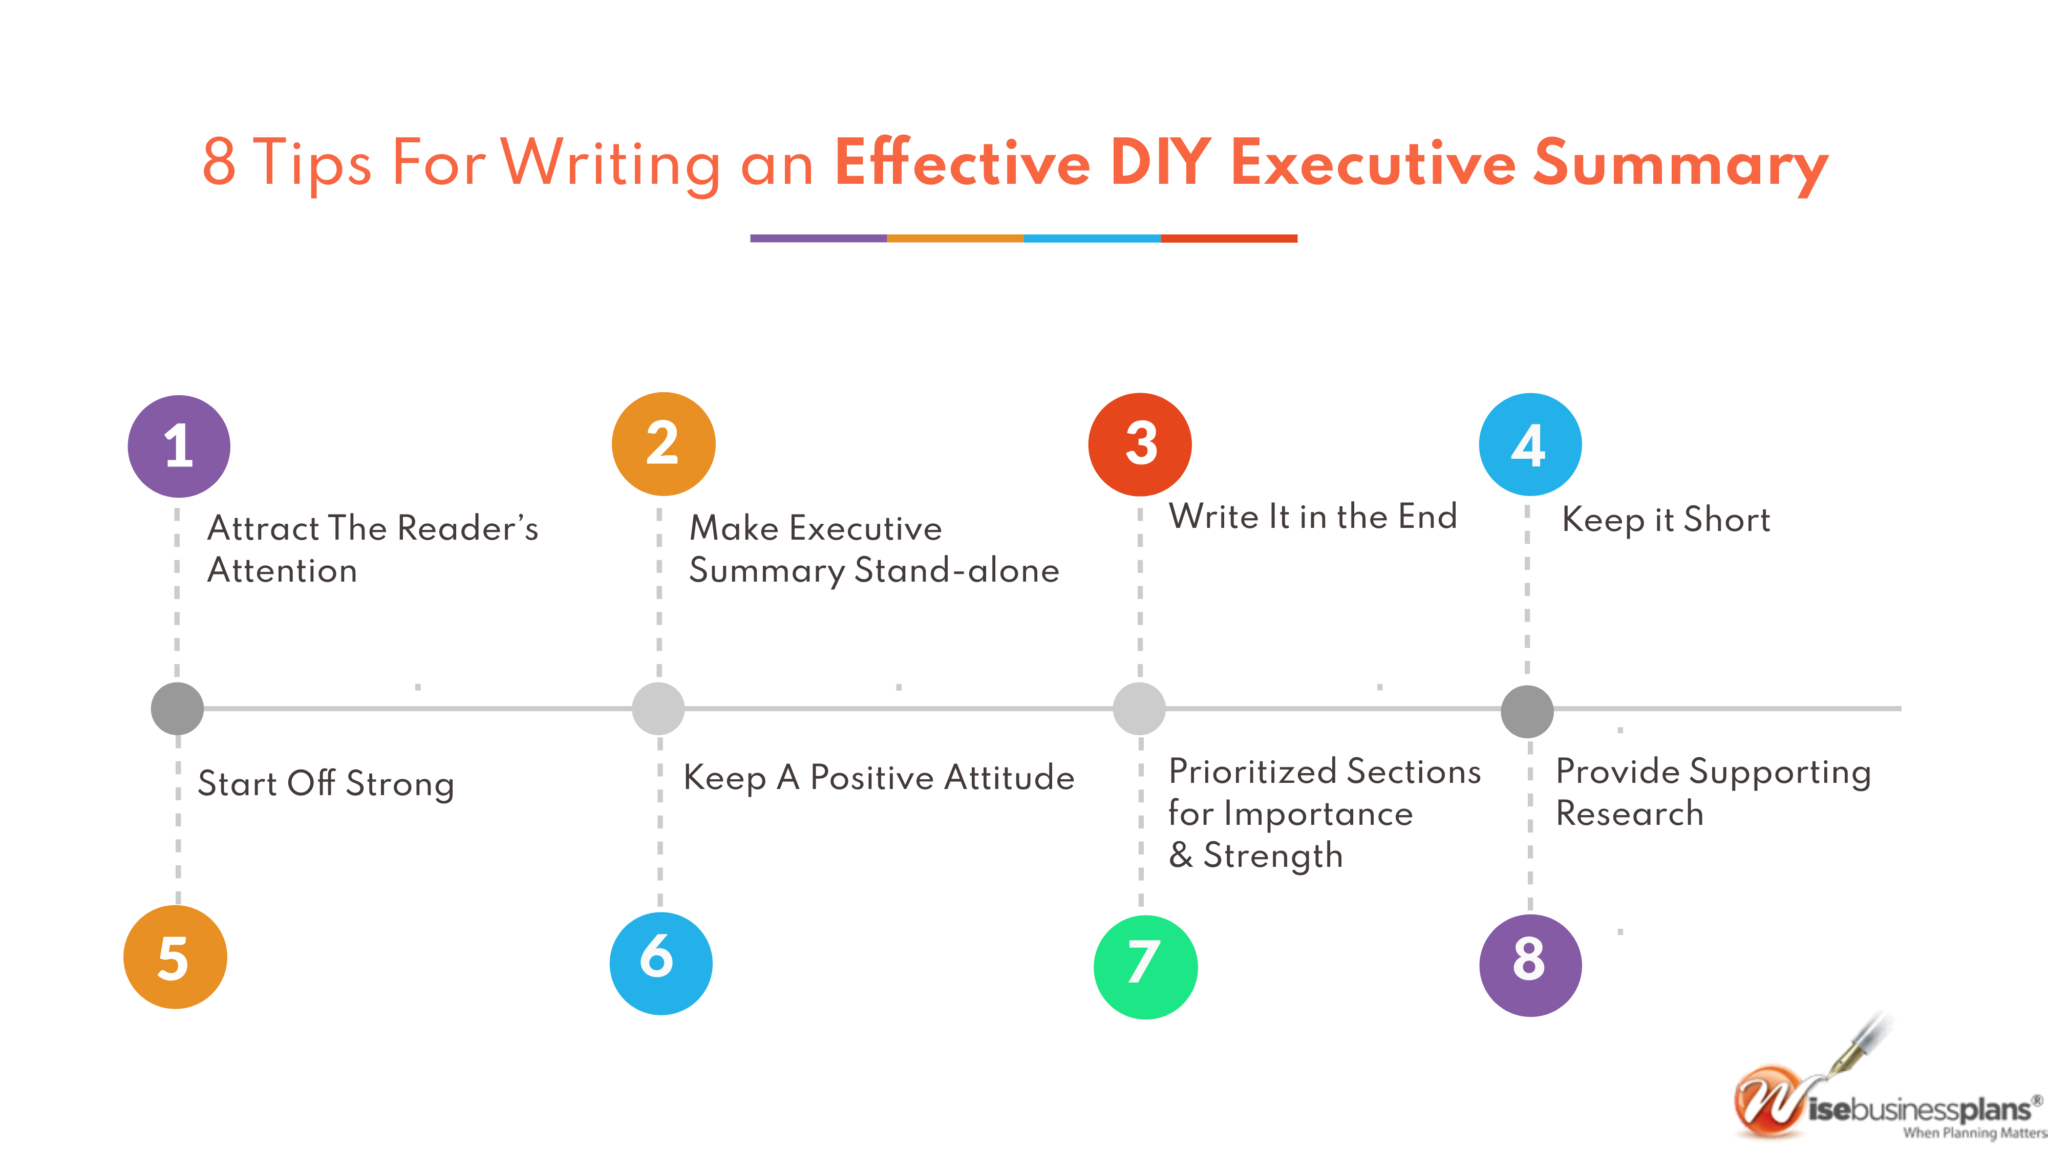 Tips for Writing an Effective DIY Executive Summary